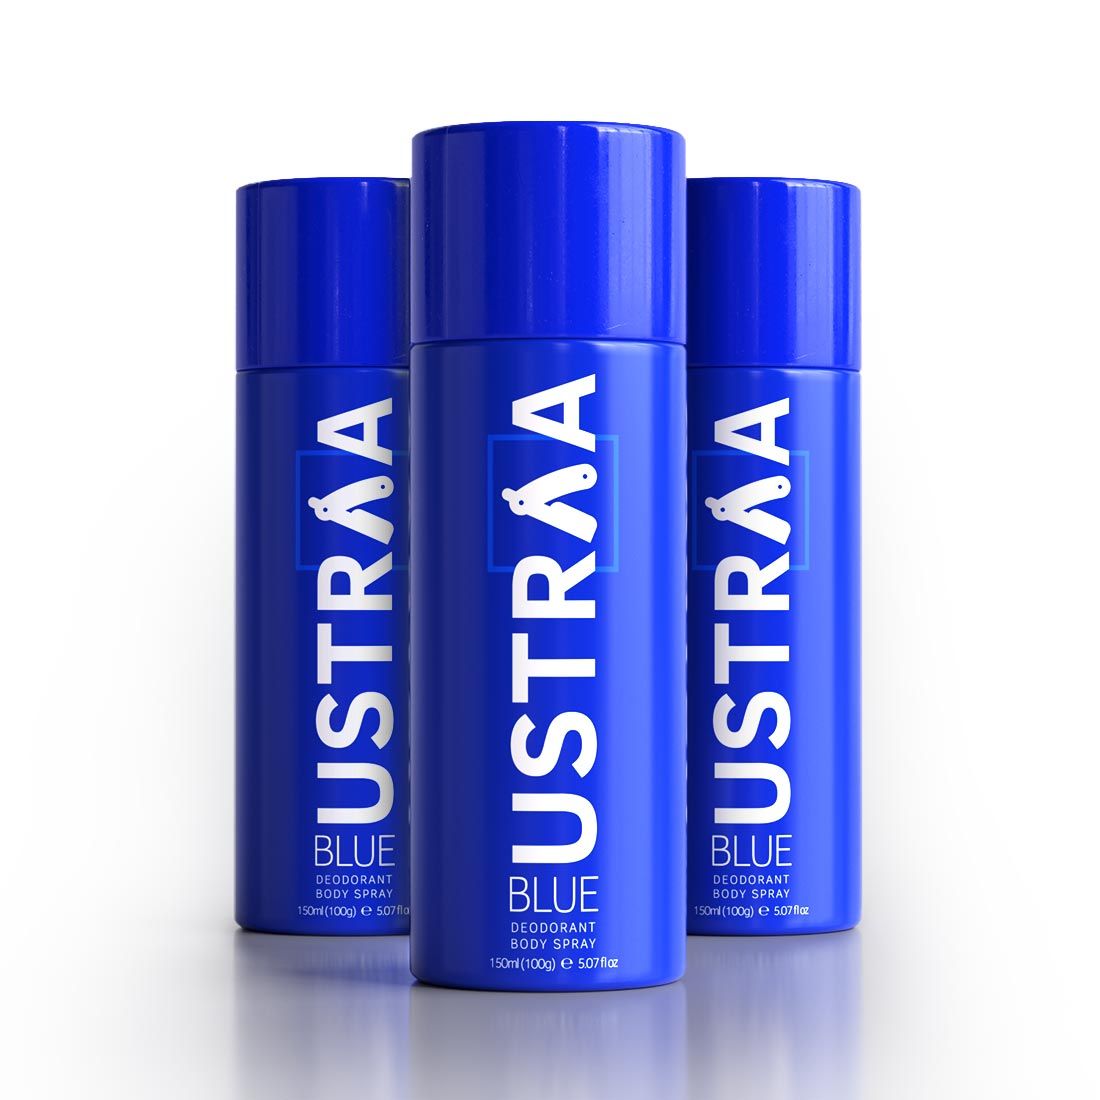 Ustraa Blue Deodorant Body Spray (Set of 3)